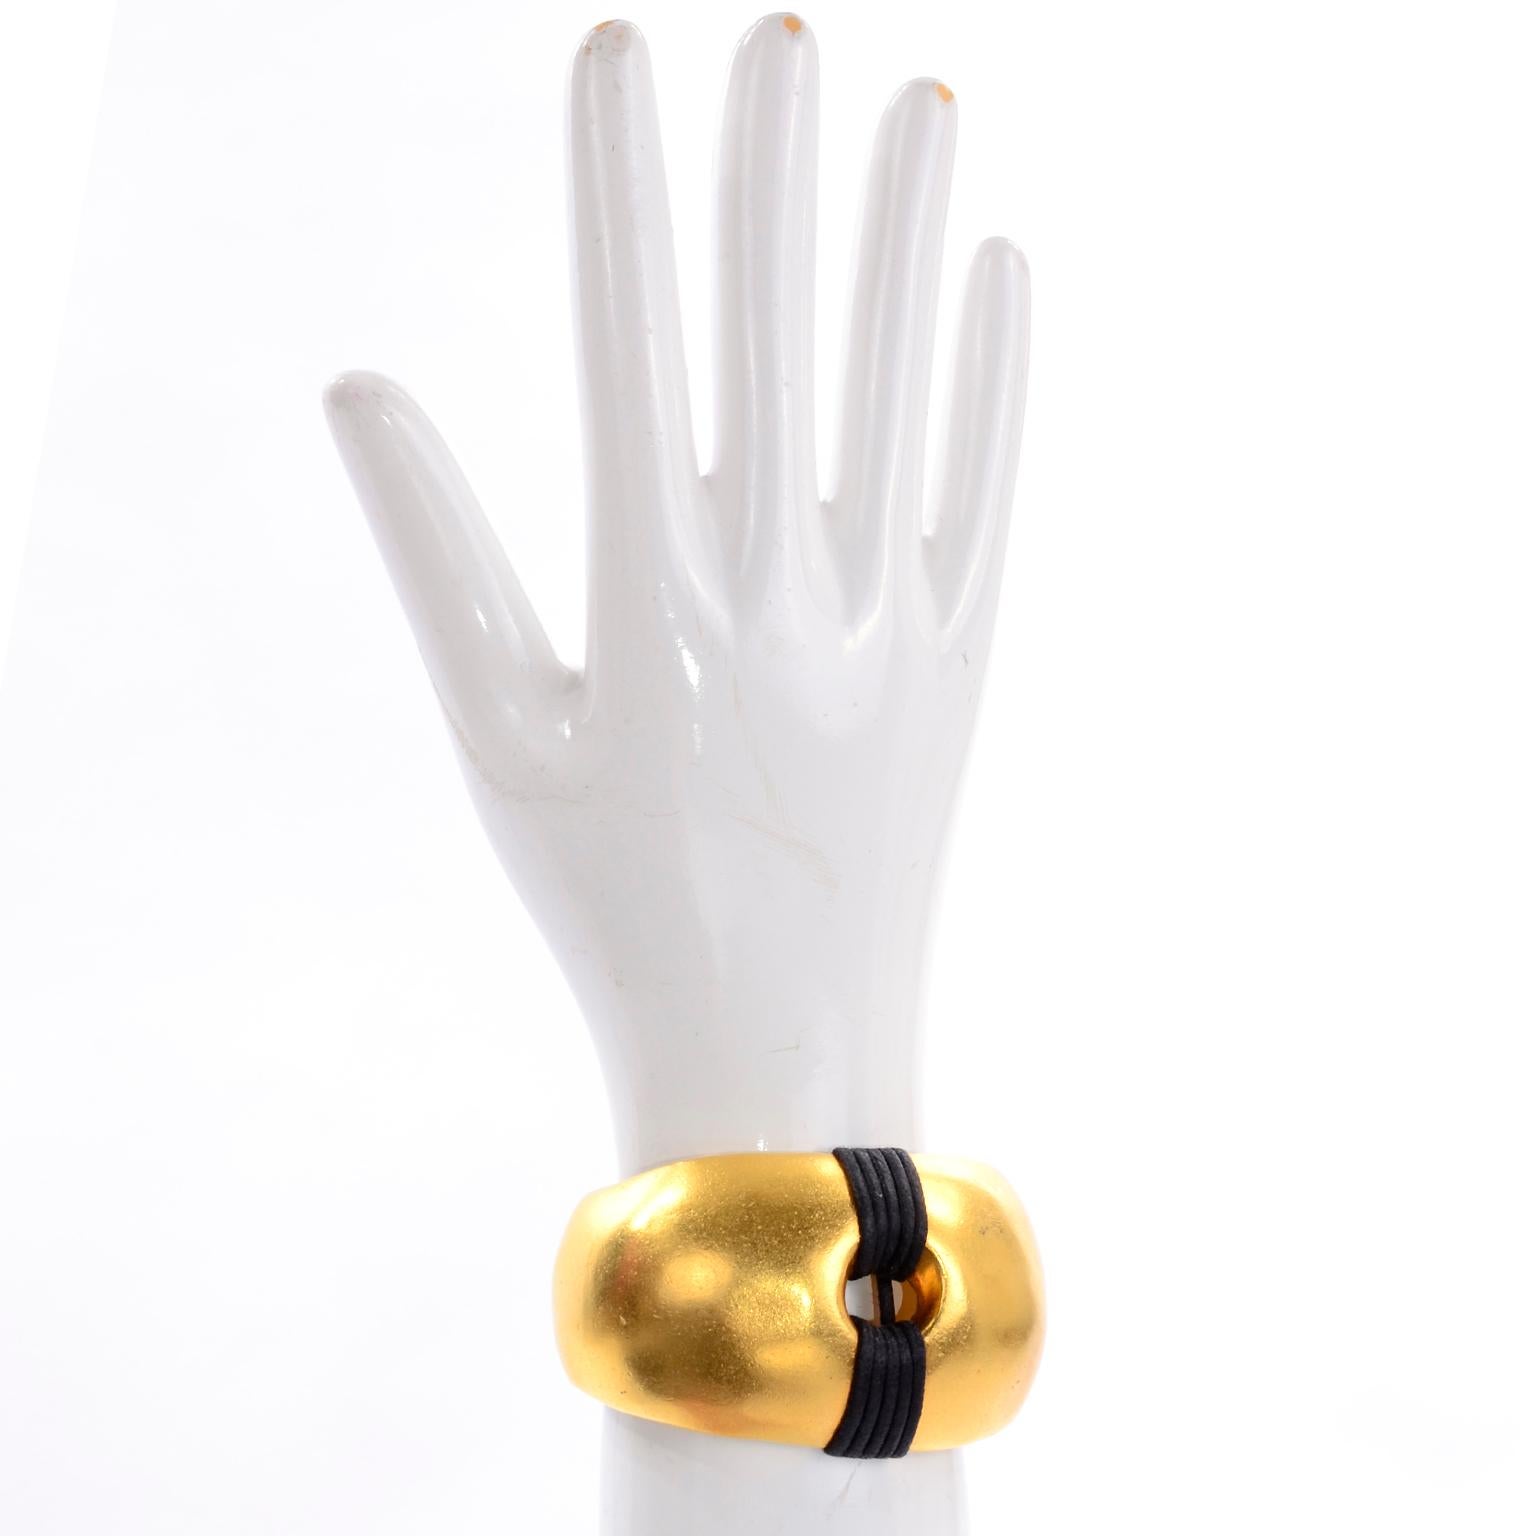 1980s Vintage Gold Plated Cuff Modern Bracelet With Black Band Details For Sale 6